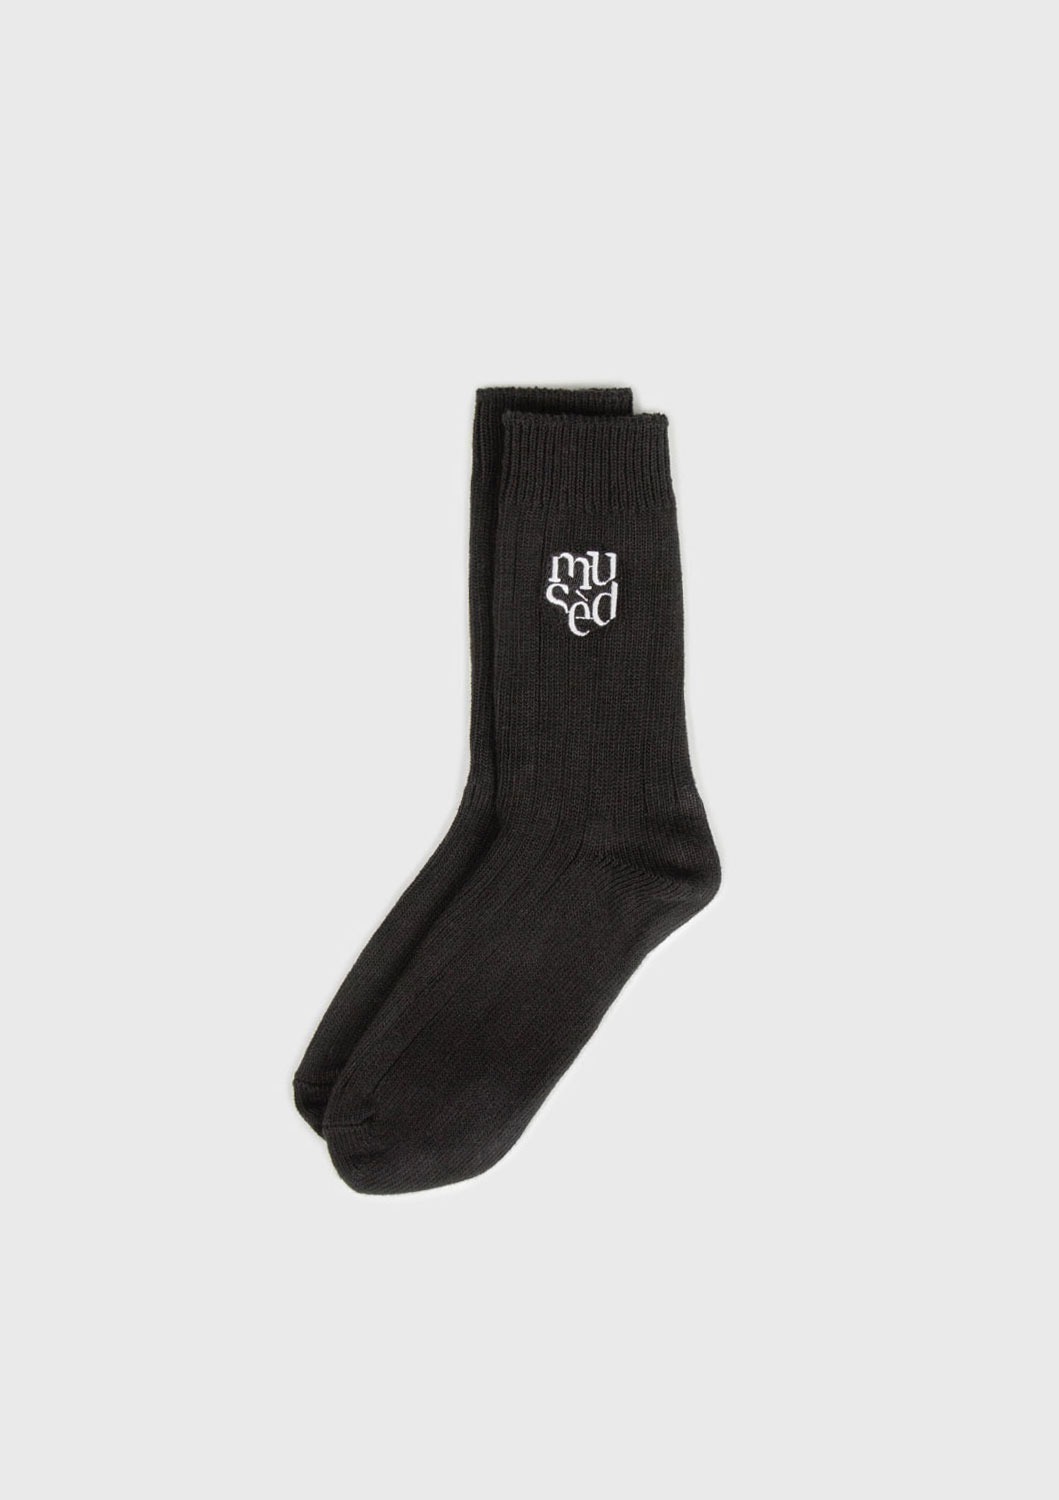 Musèd Logo Socks - Black Cotton